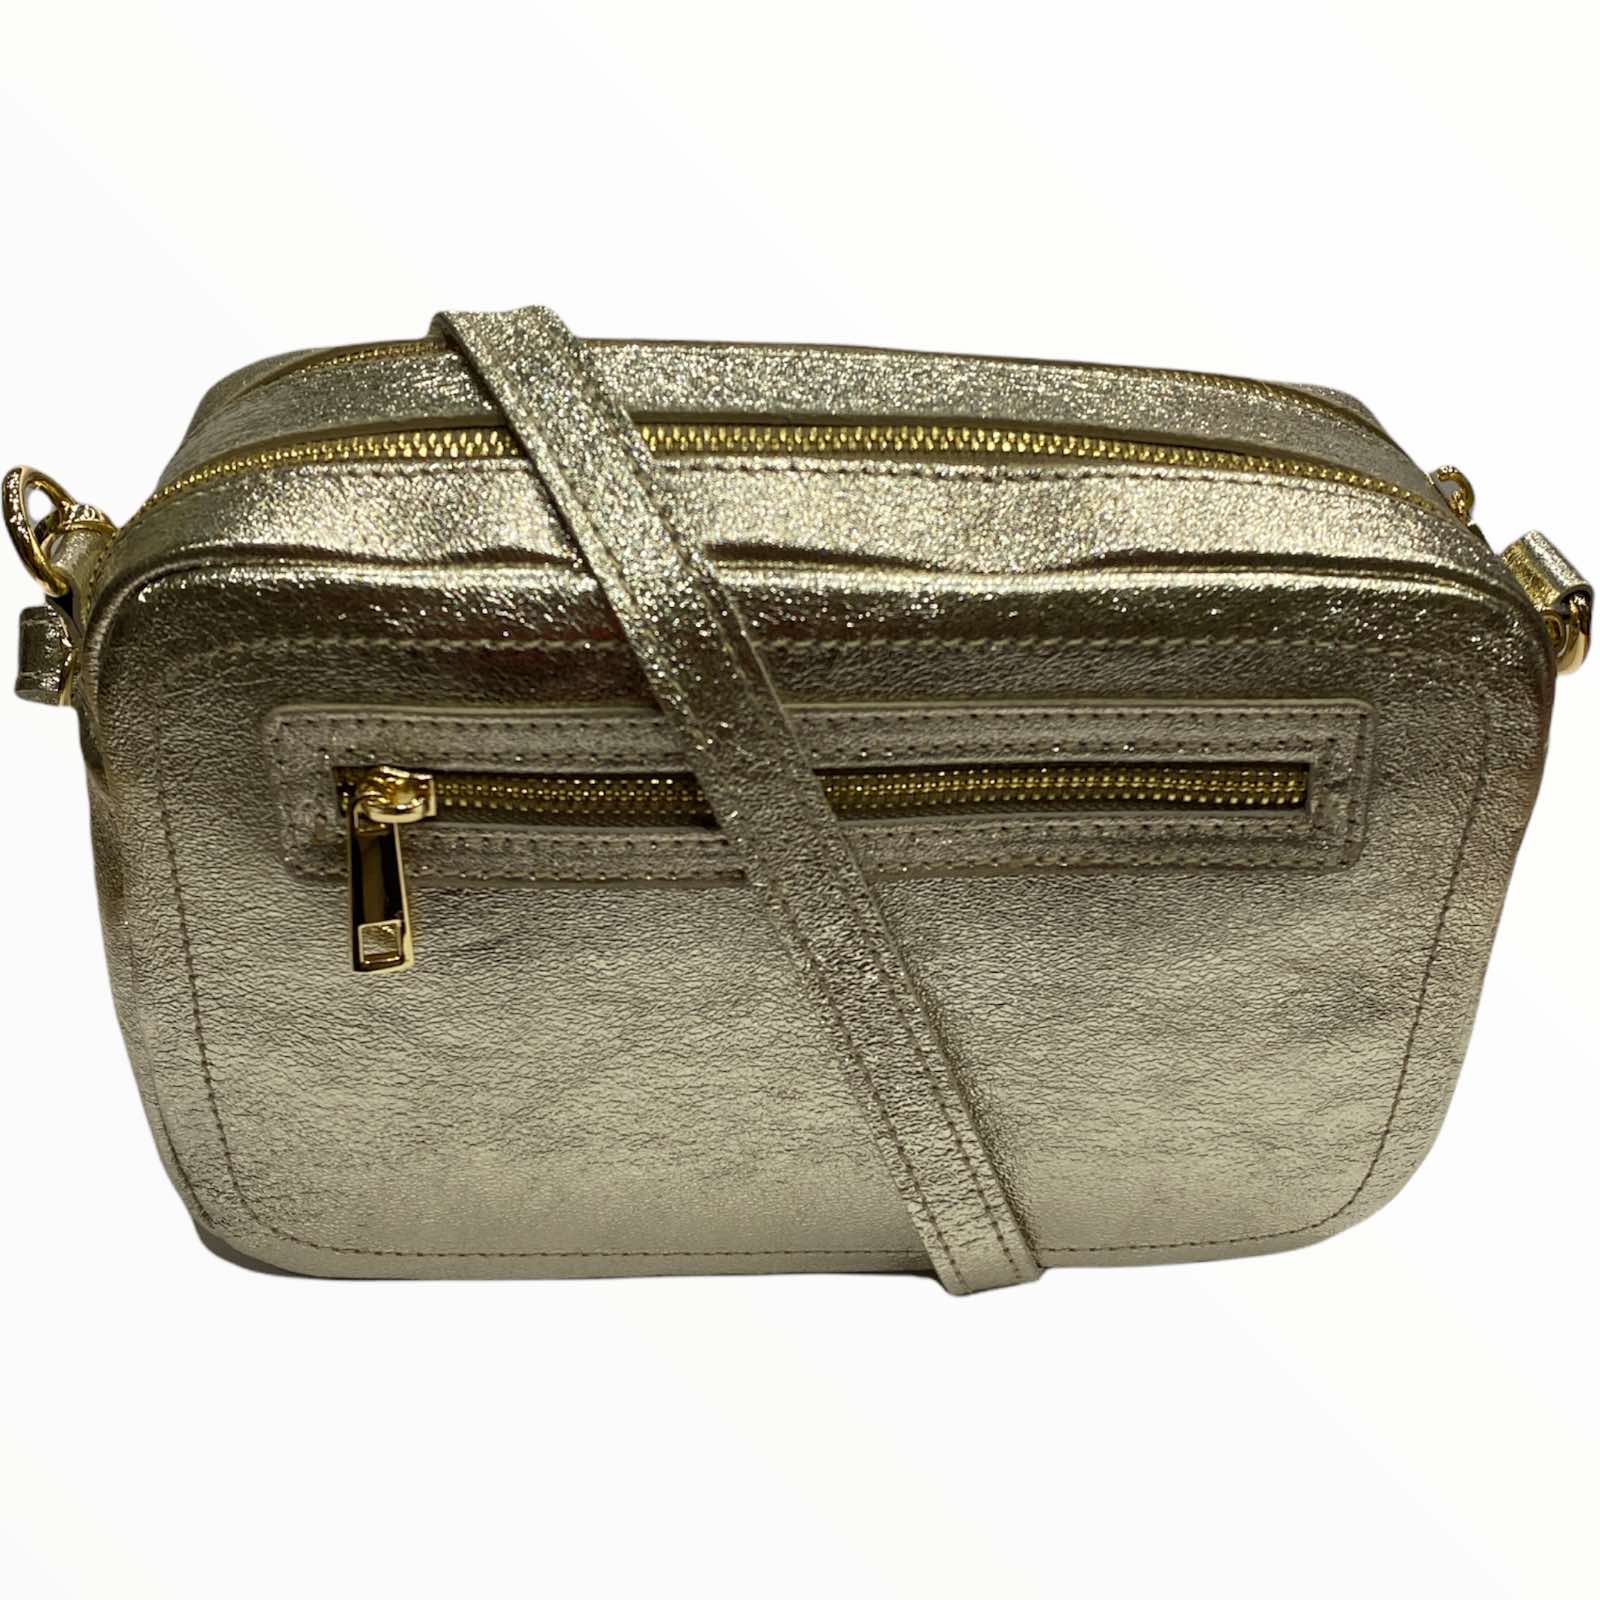 Gold luxury leather messenger bag